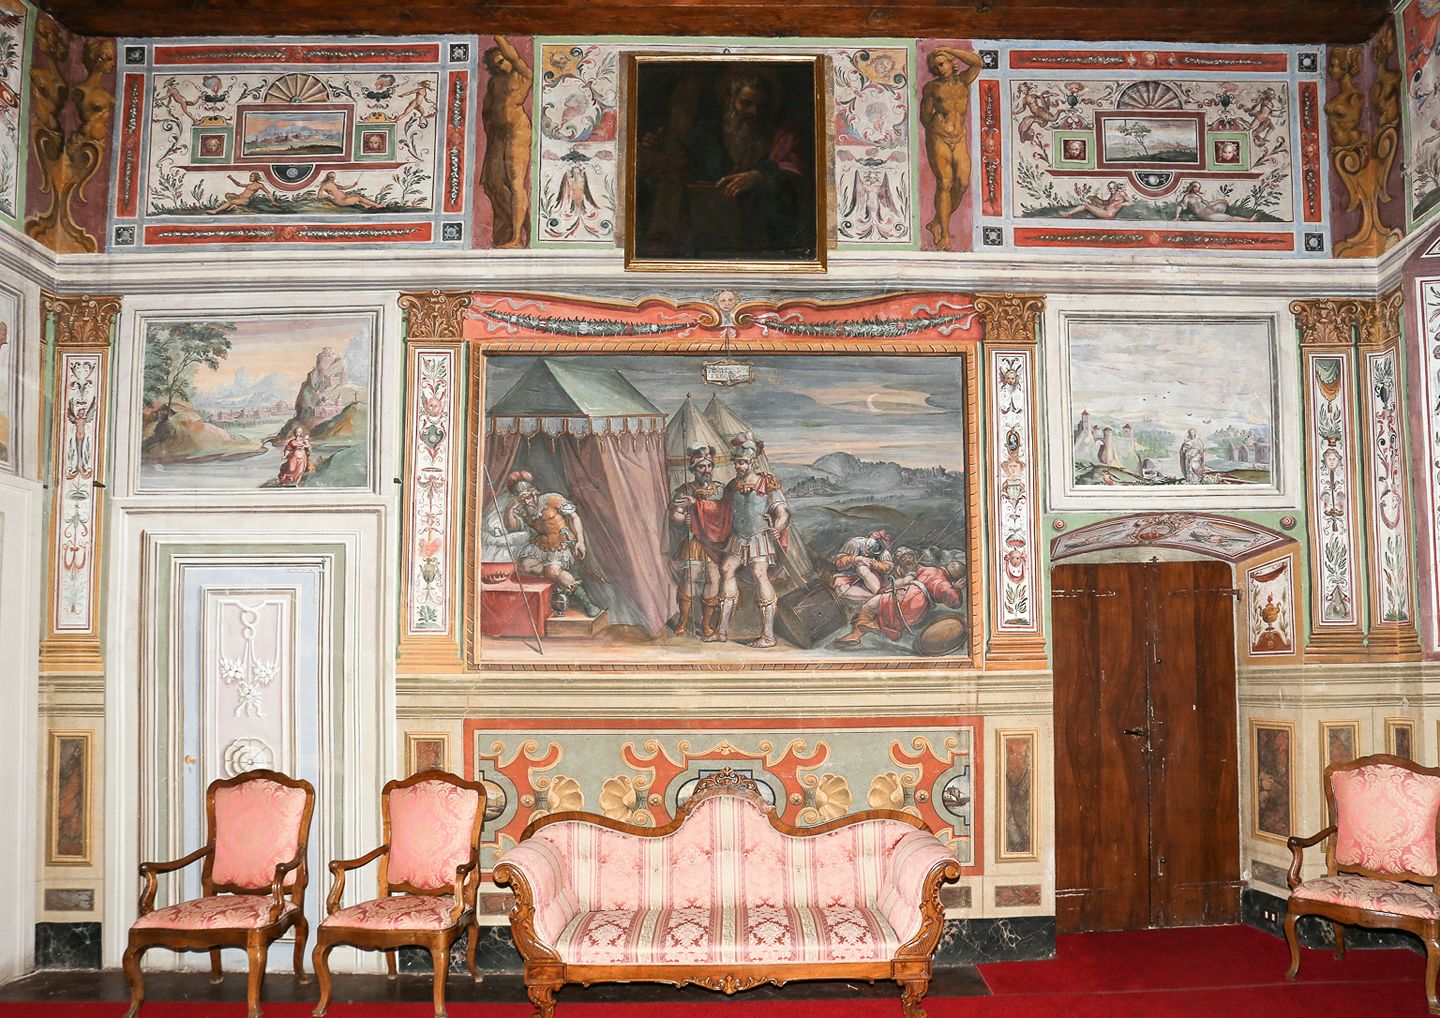 Museo Diocesano de Arte Sacro de Arezzo